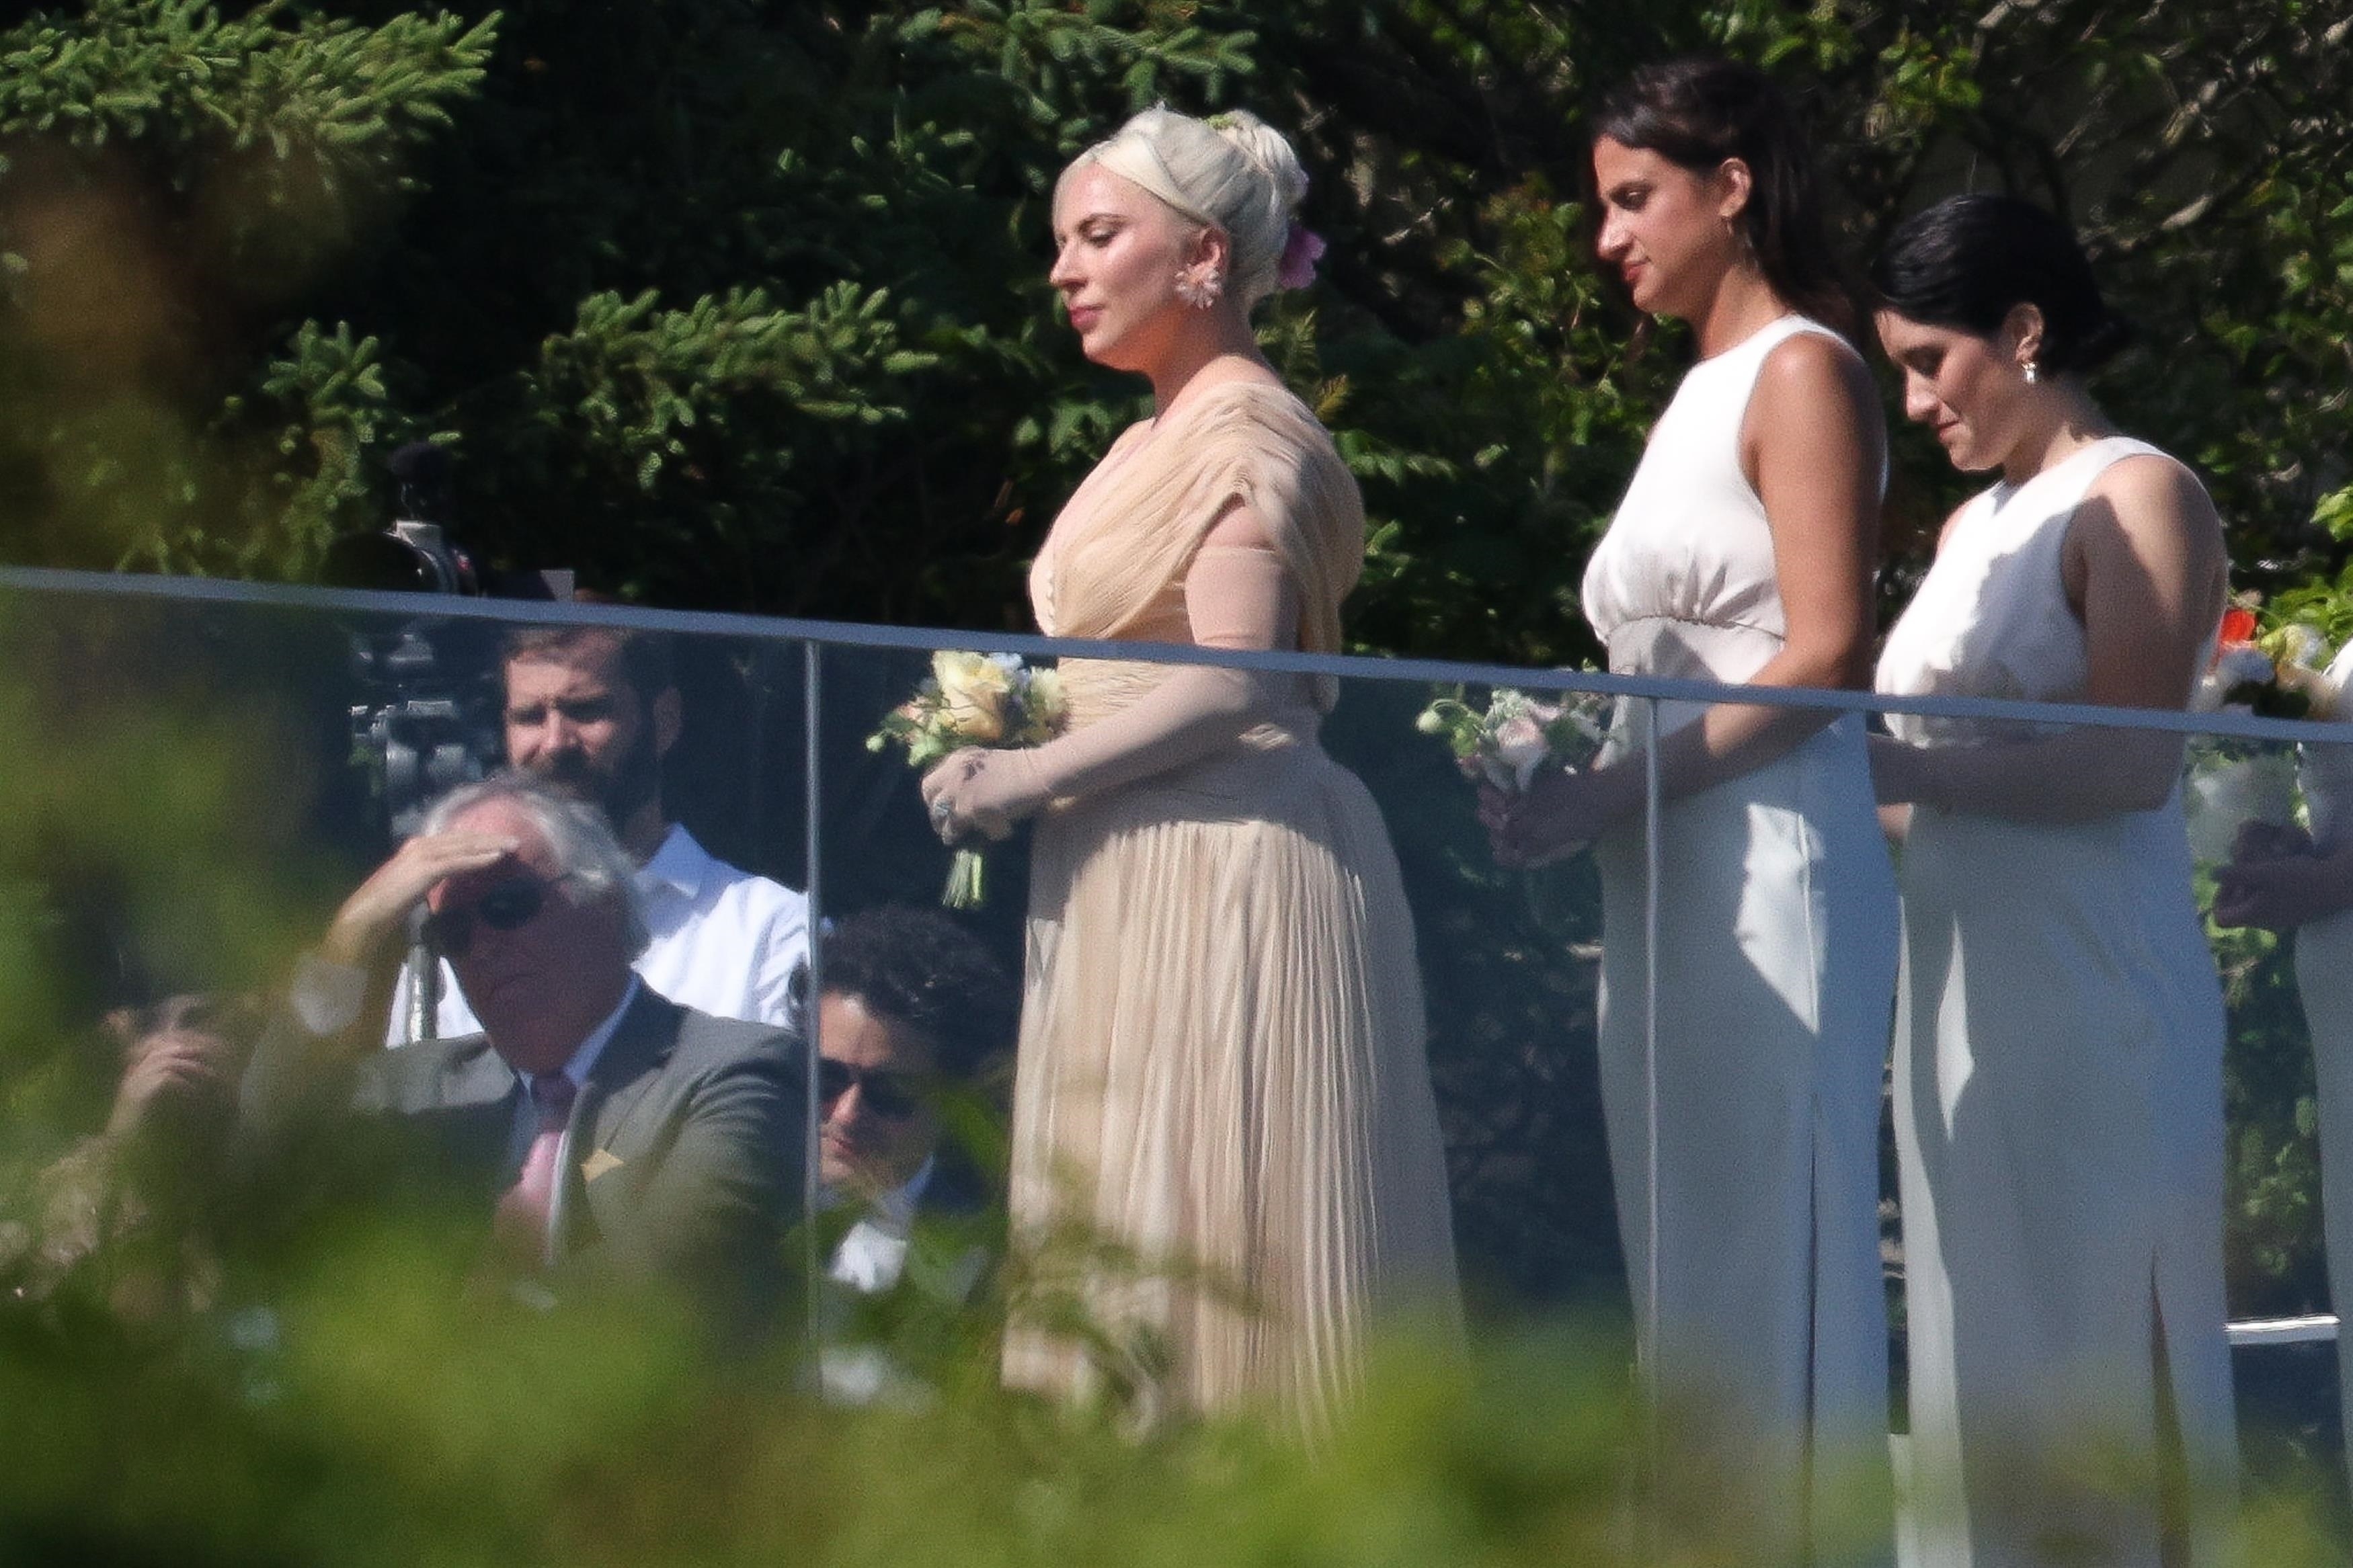 Gaga attended the wedding with her boyfriend Michael Polansky